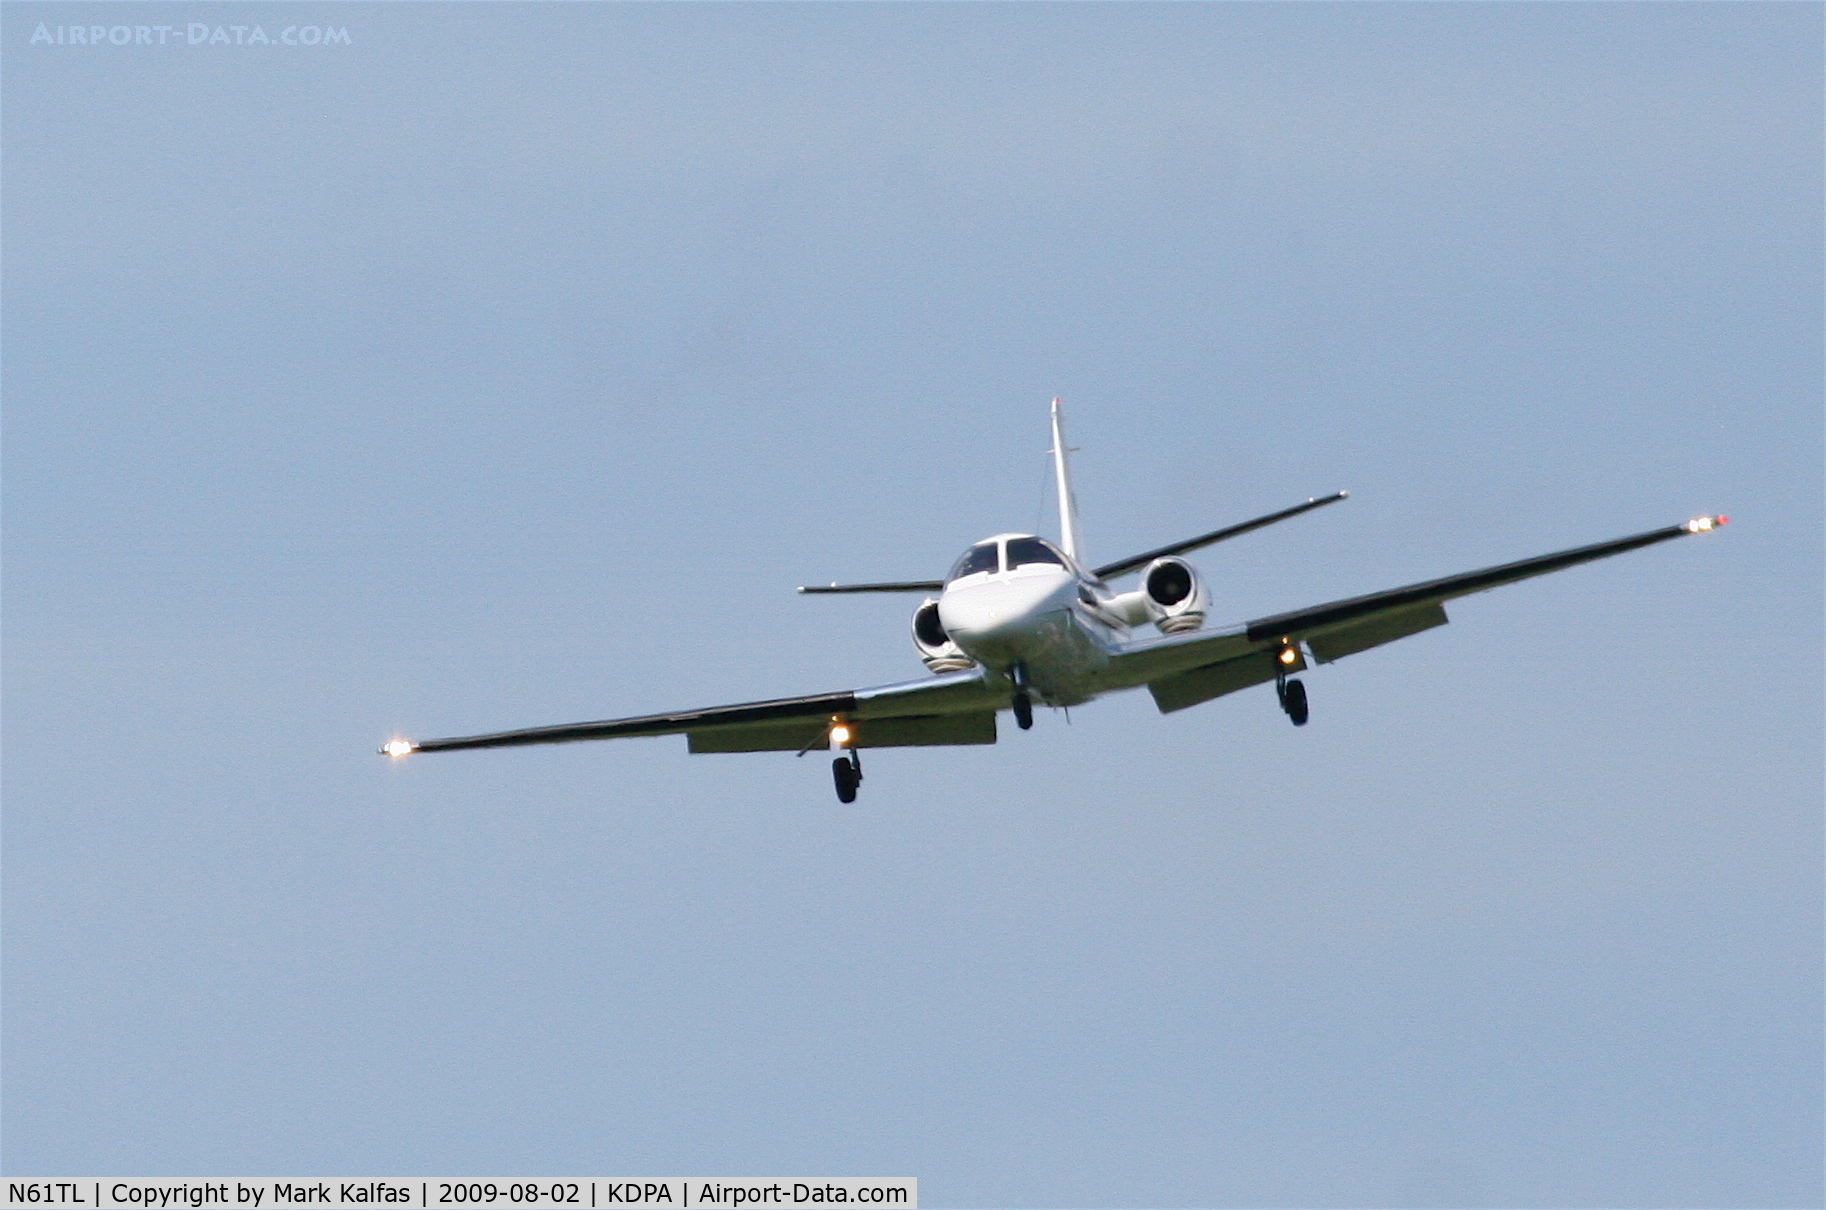 N61TL, 1998 Cessna 560 C/N 560-0461, Cessna 560, N61TL on approach RWY 20R KDPA.